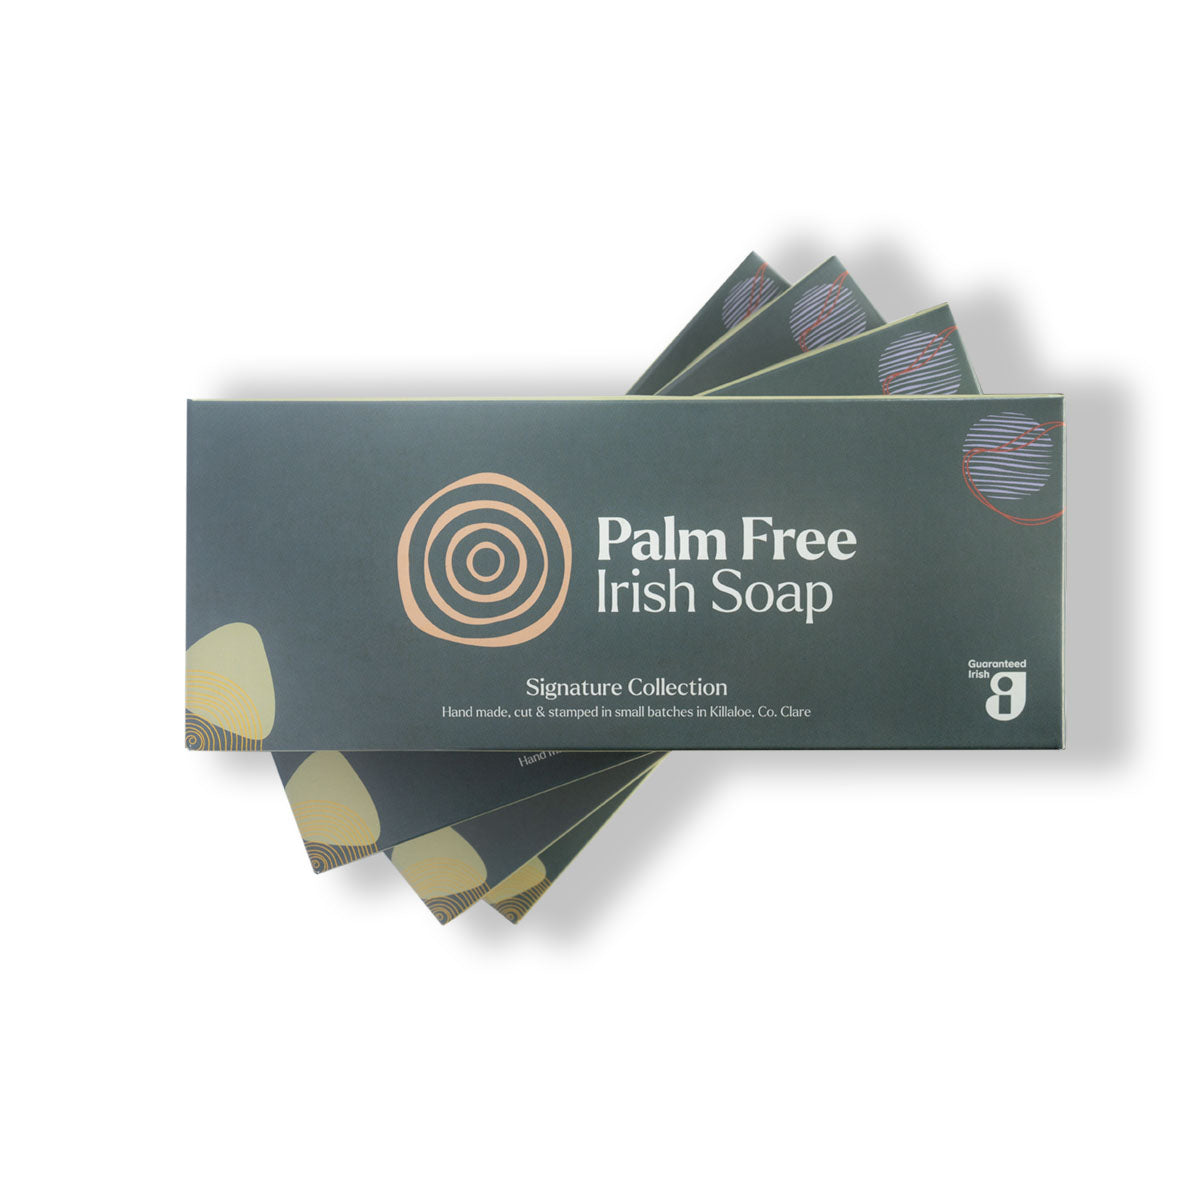 Palm Free Irish Soap, Gift Pack - 3 Palm Free Soaps